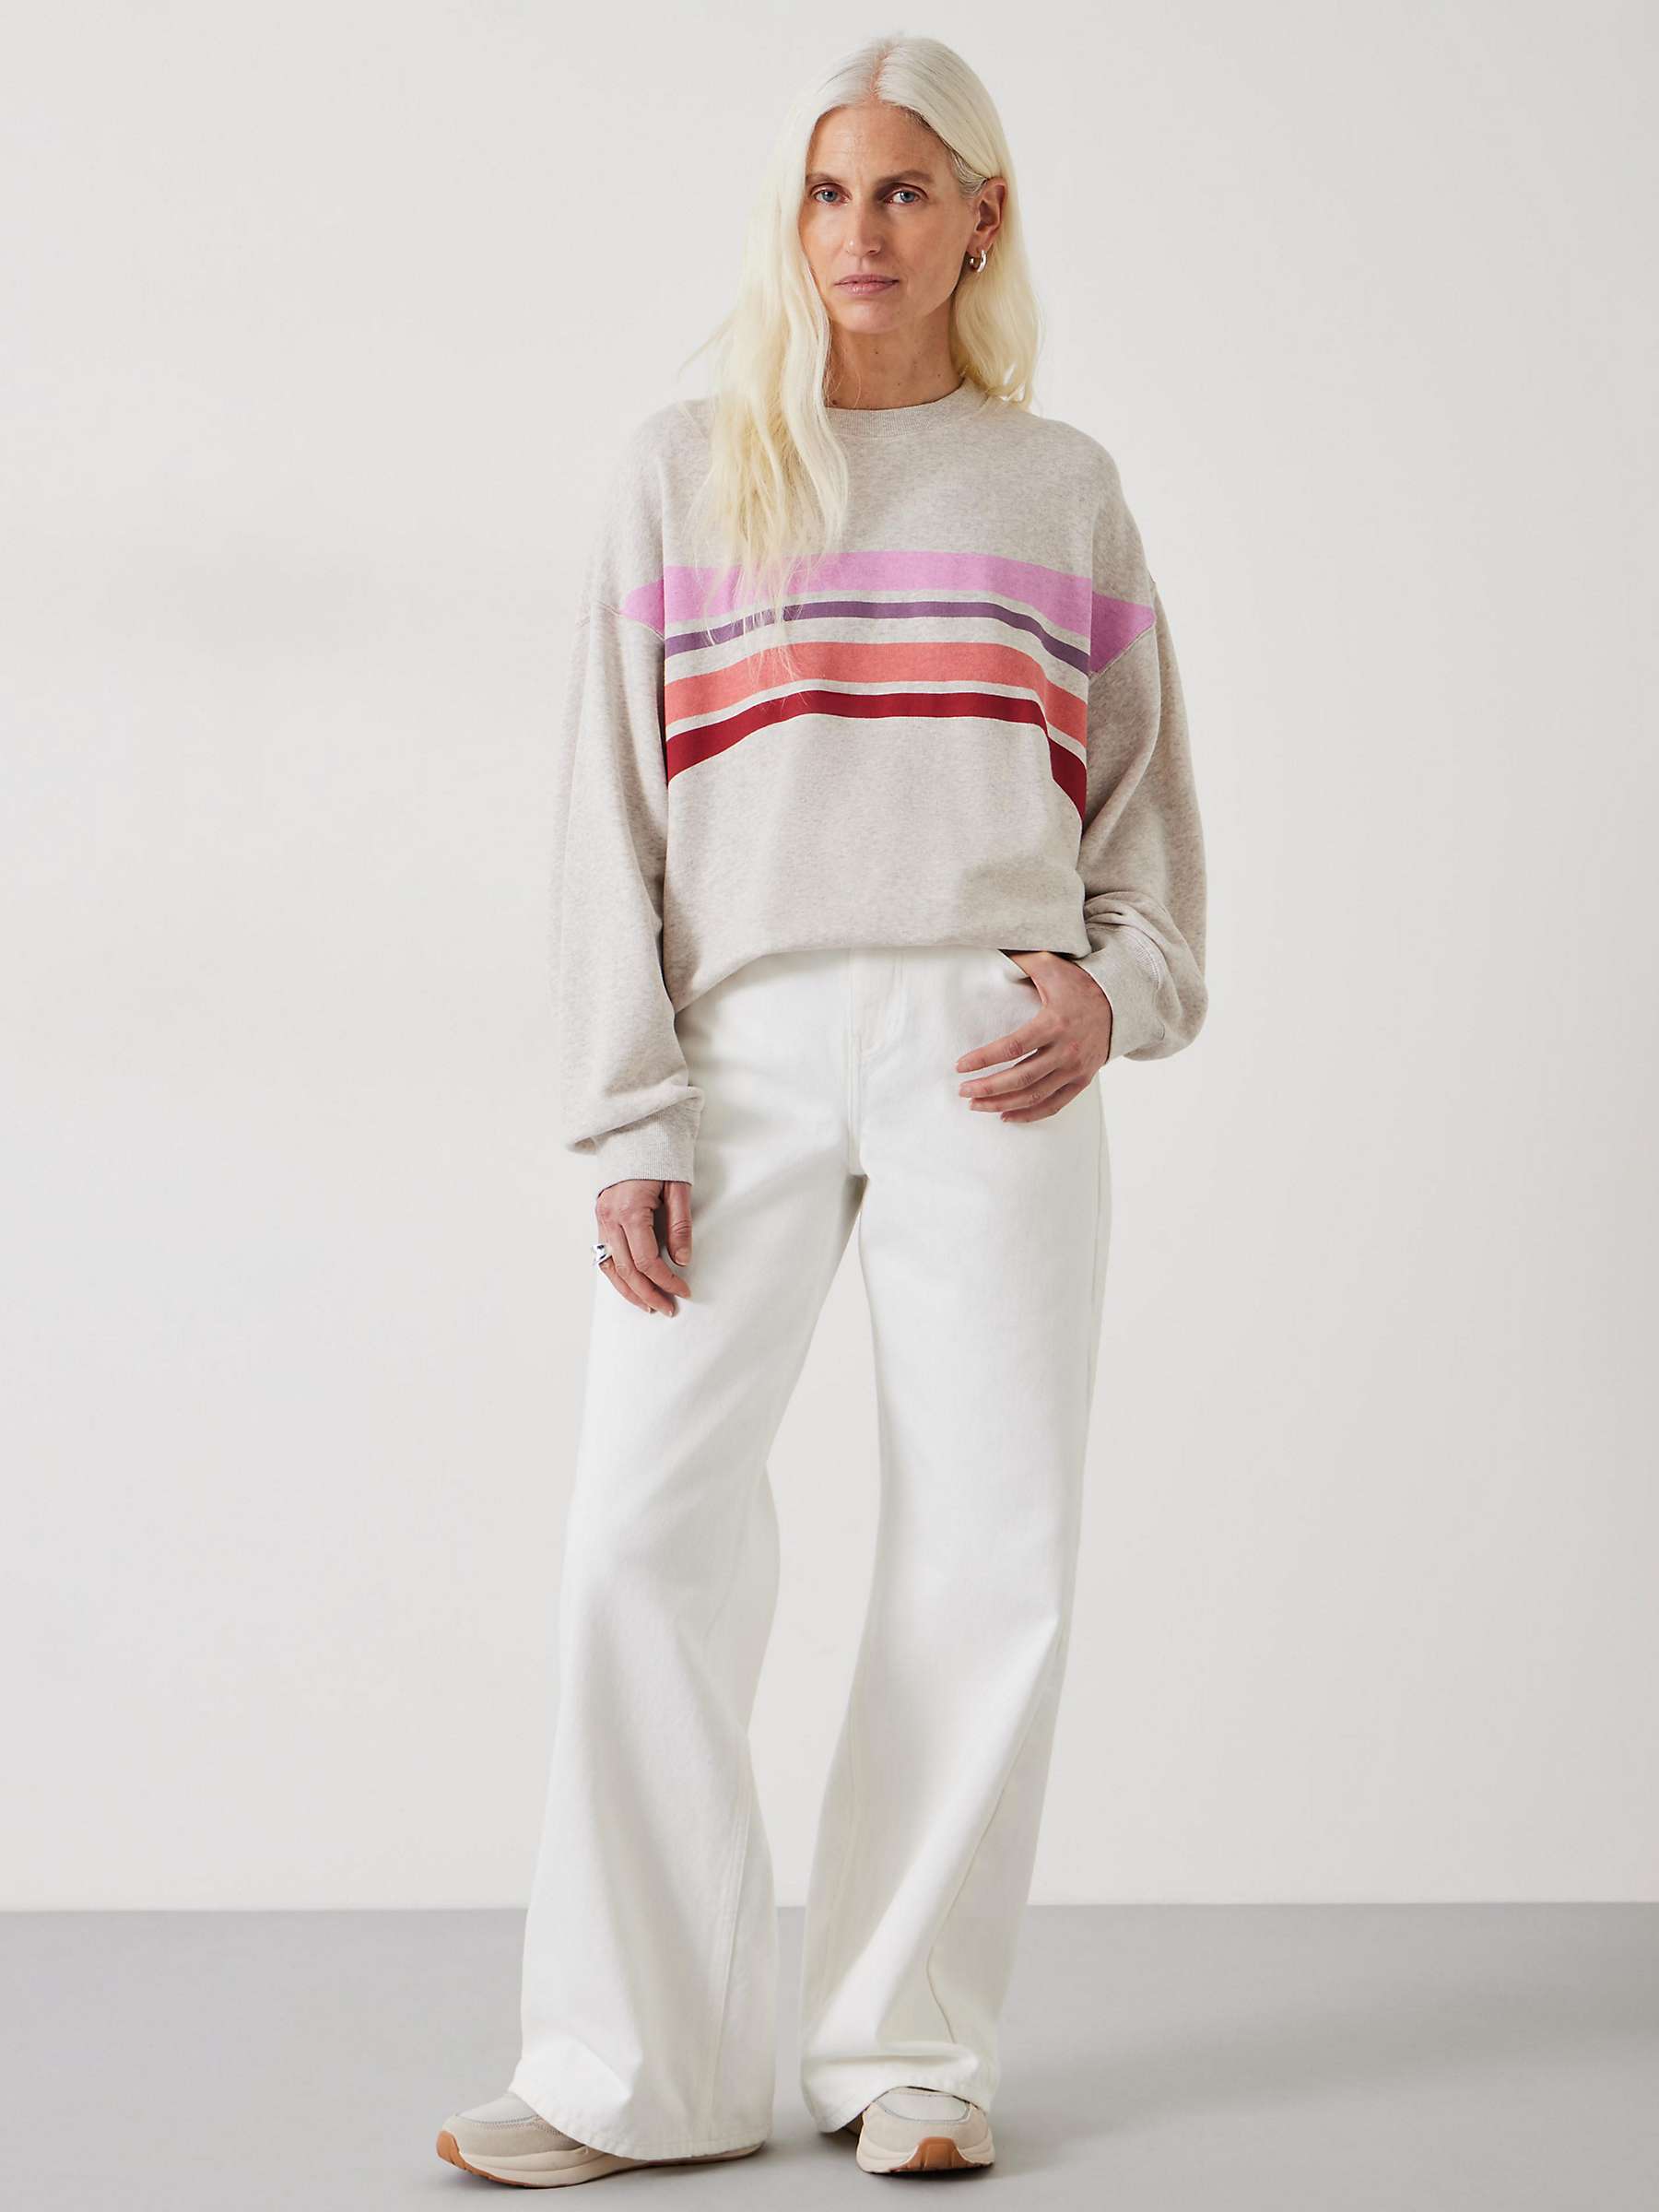 Buy HUSH Eden Stripe Oversized Cotton Sweatshirt, Oatmeal Marl/Multi Online at johnlewis.com